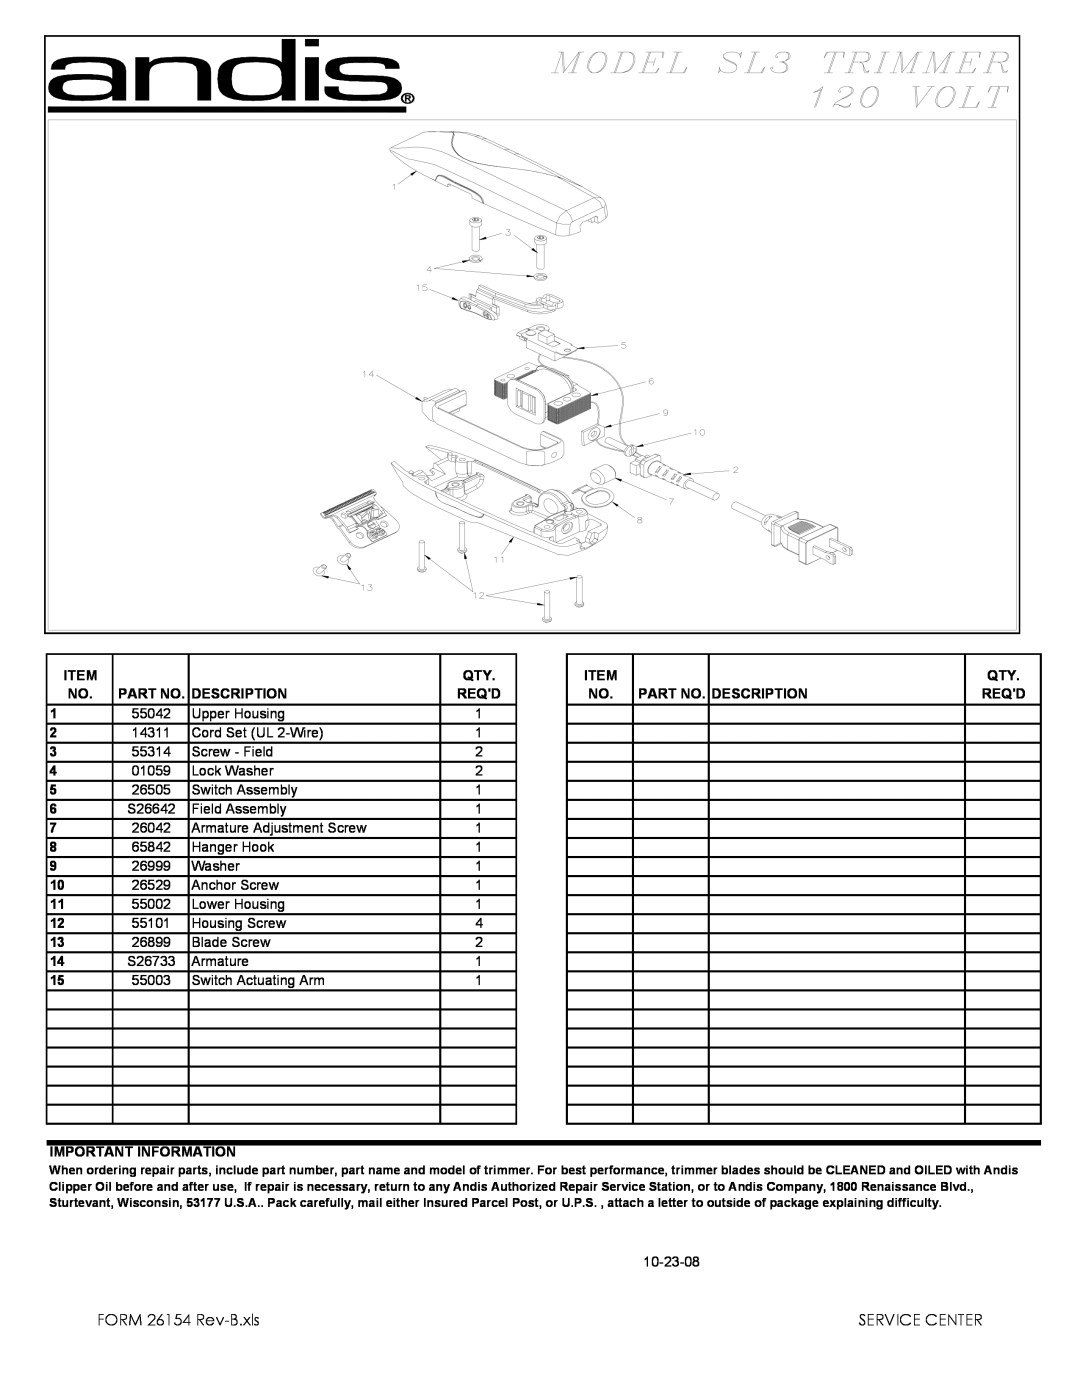 Andis Company SL3 manual FORM 26154 Rev-B.xls, Service Center 